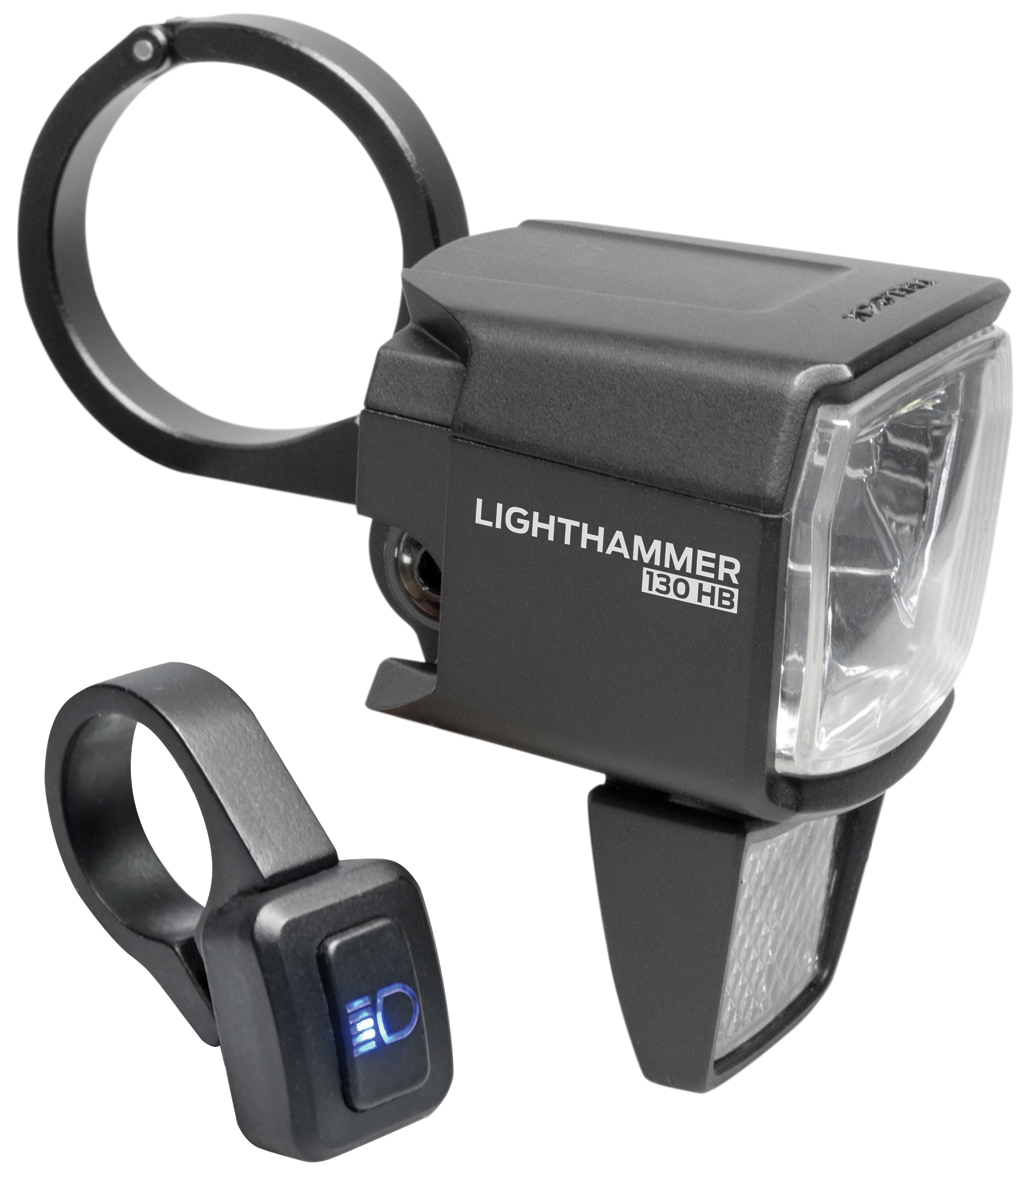 LS 930-HB LIGHTHAMMER